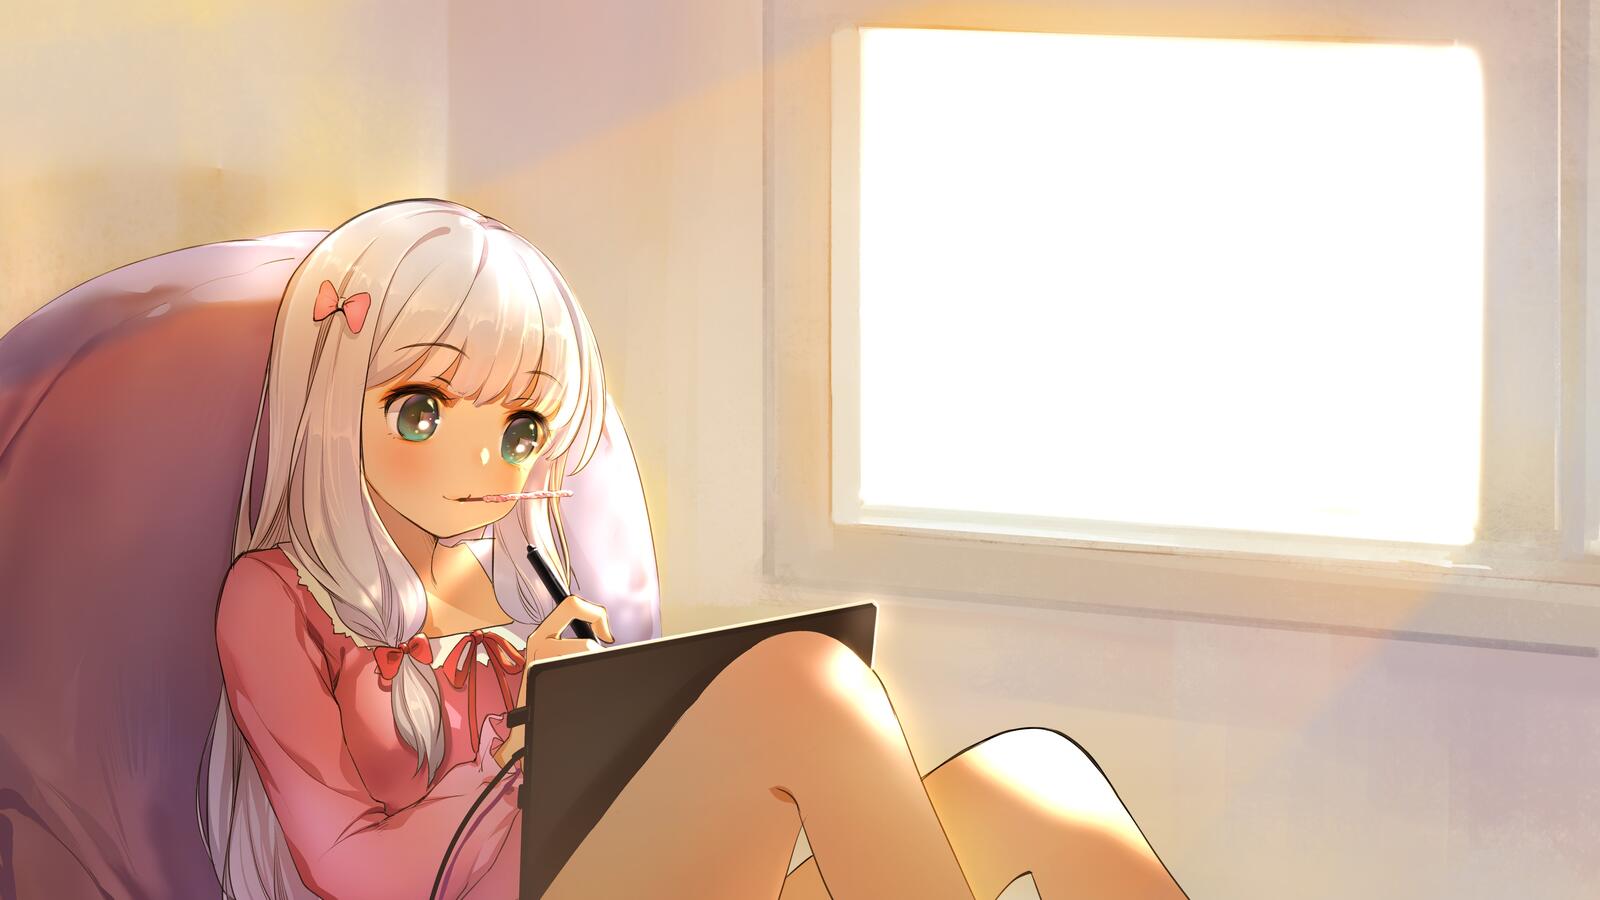 Wallpapers anime girl window room on the desktop